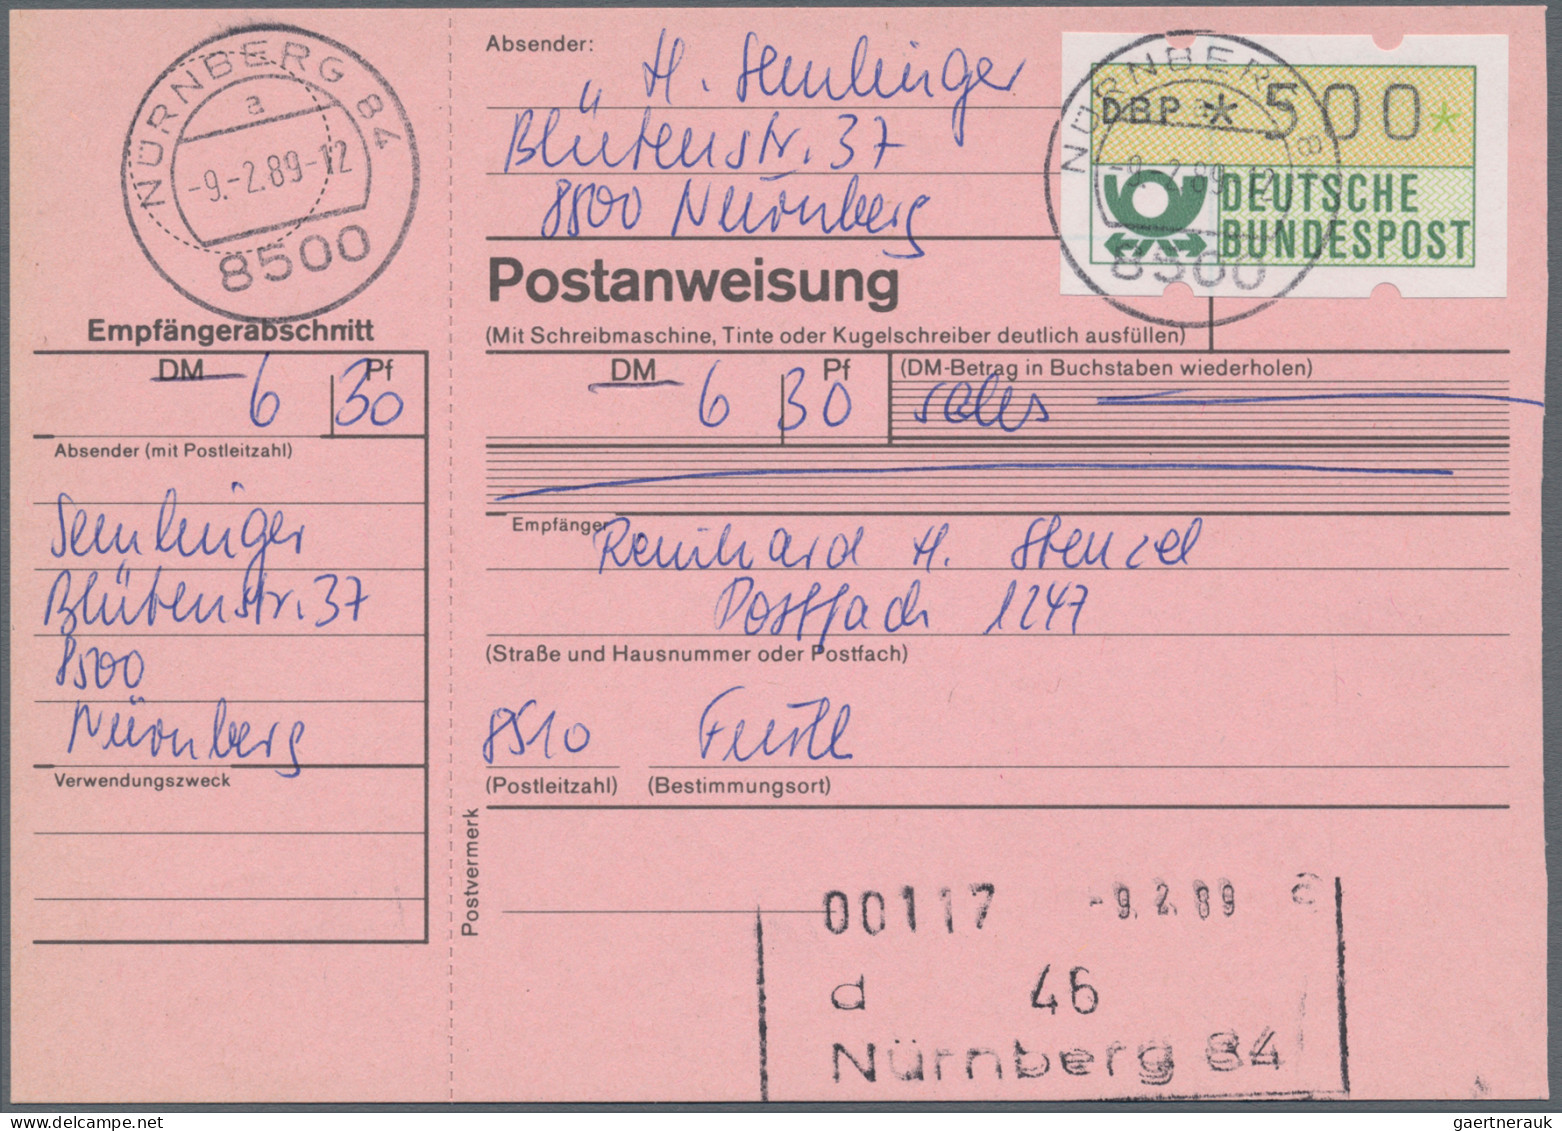 Bundesrepublik - Automatenmarken: 1981/2002, Interessanter Posten Für Den Automa - Viñetas De Franqueo [ATM]